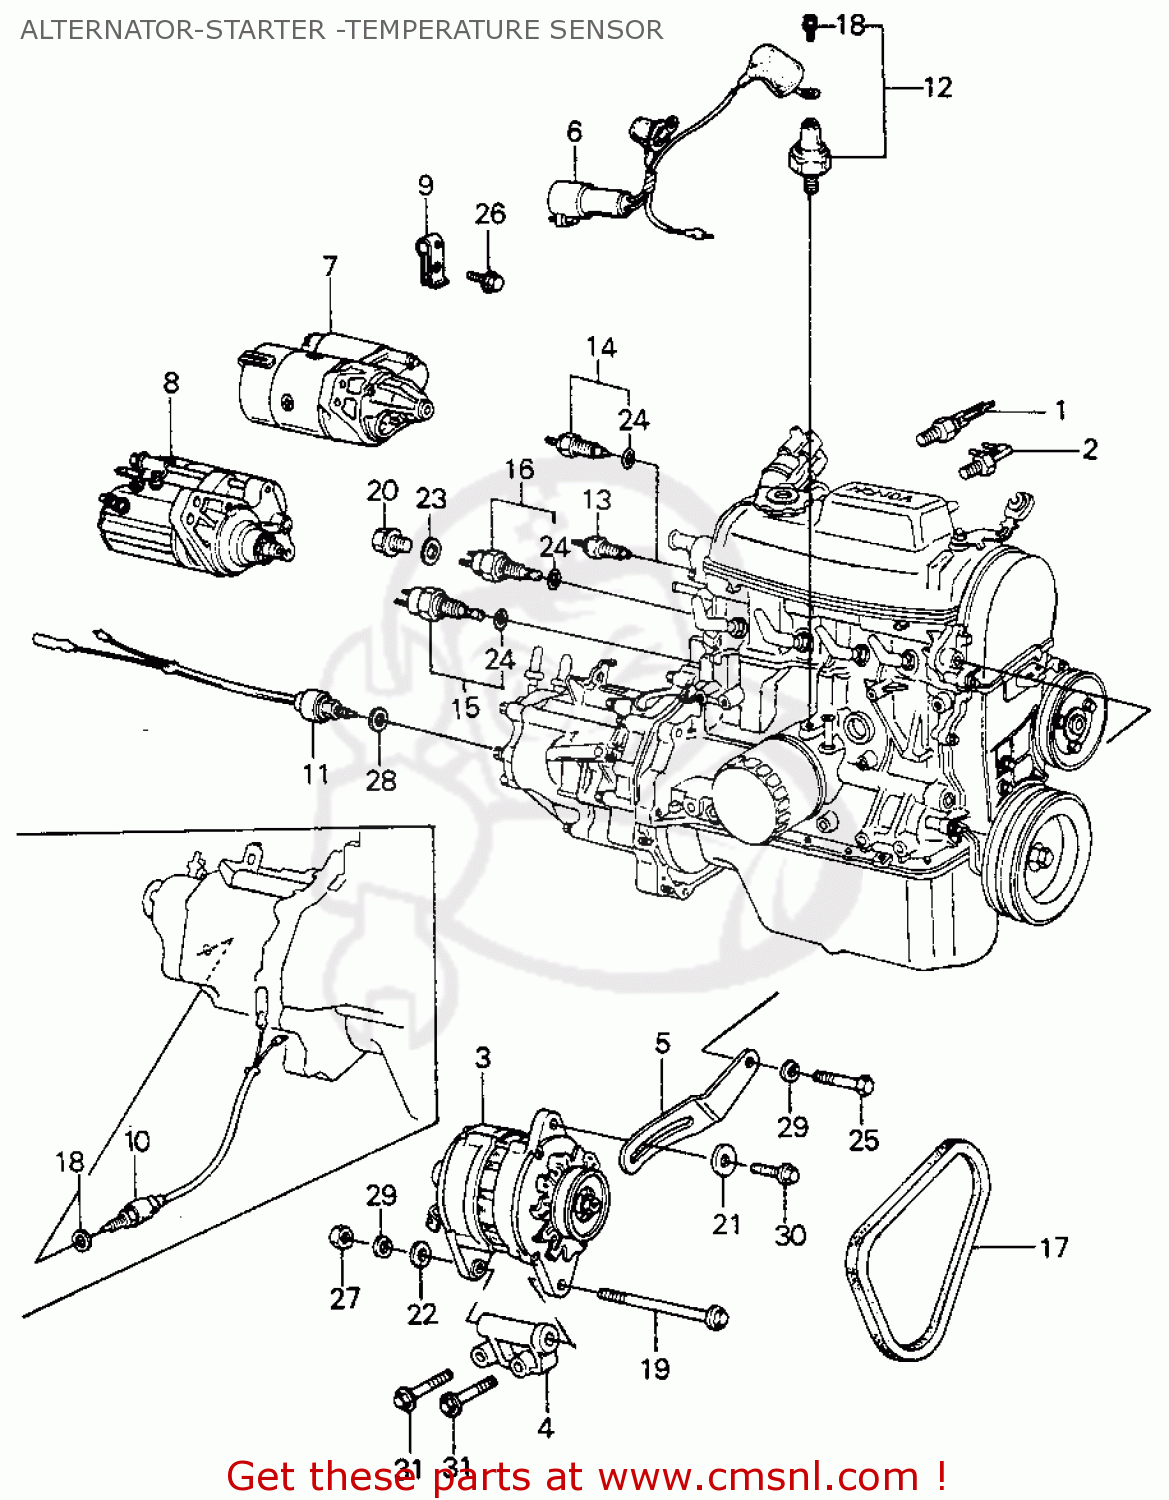 1989 Honda accord alternator problems #5